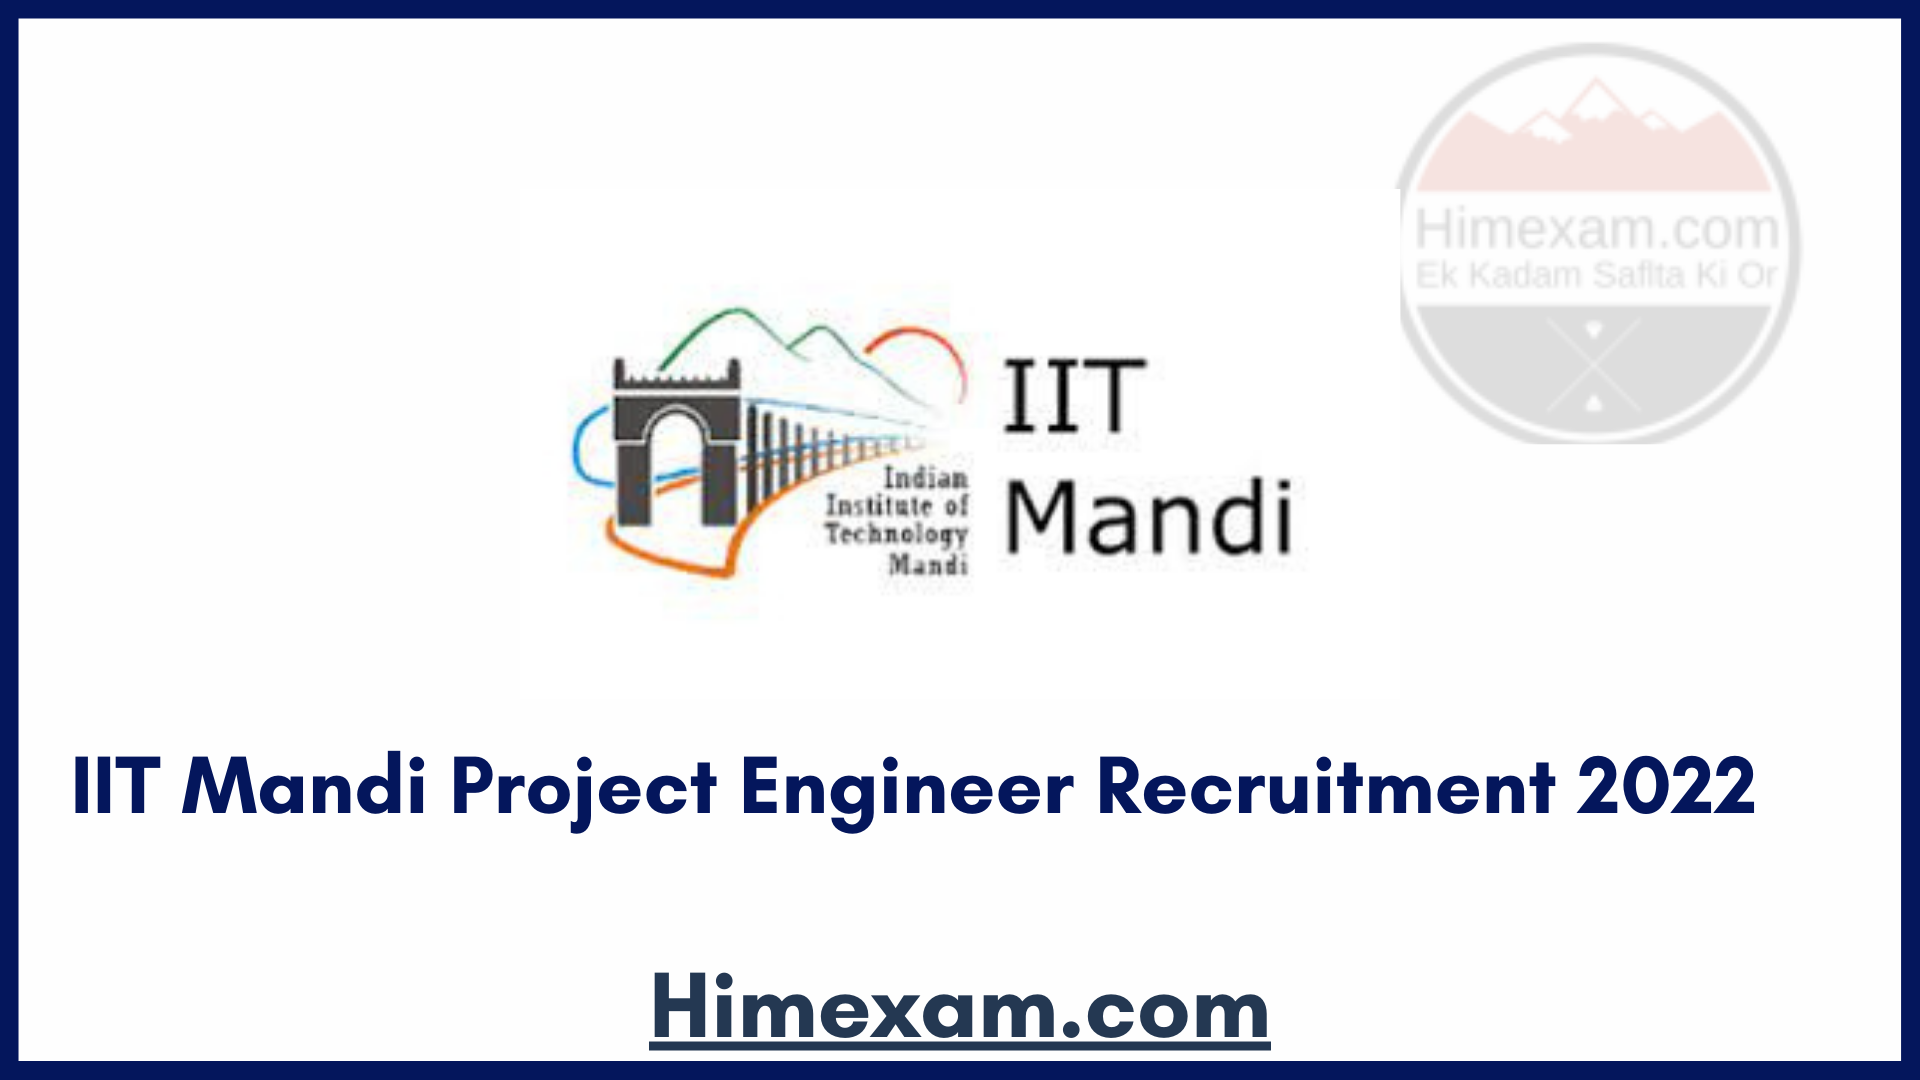 IIT Mandi Project Engineer Recruitment 2022